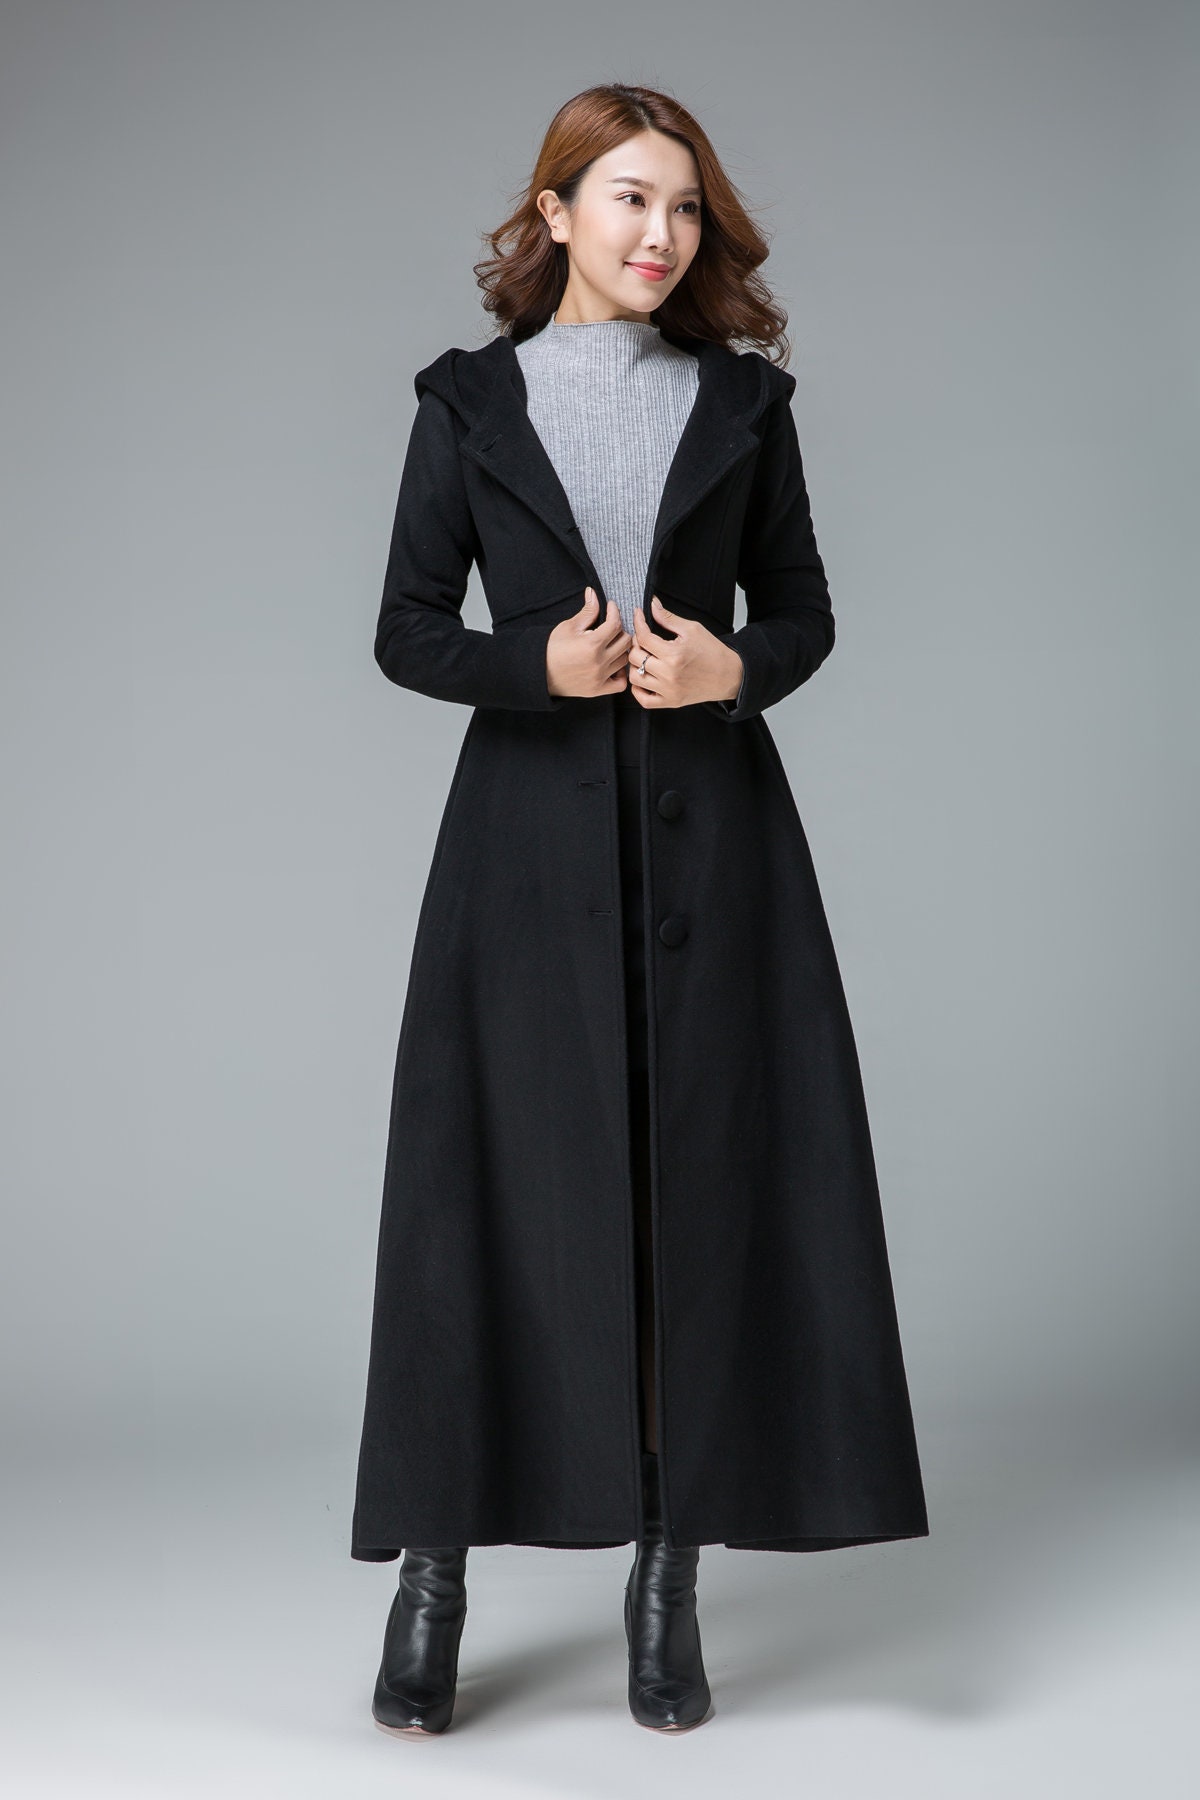 Jueshanzj Womens Winter Long Wool Coat with Hood